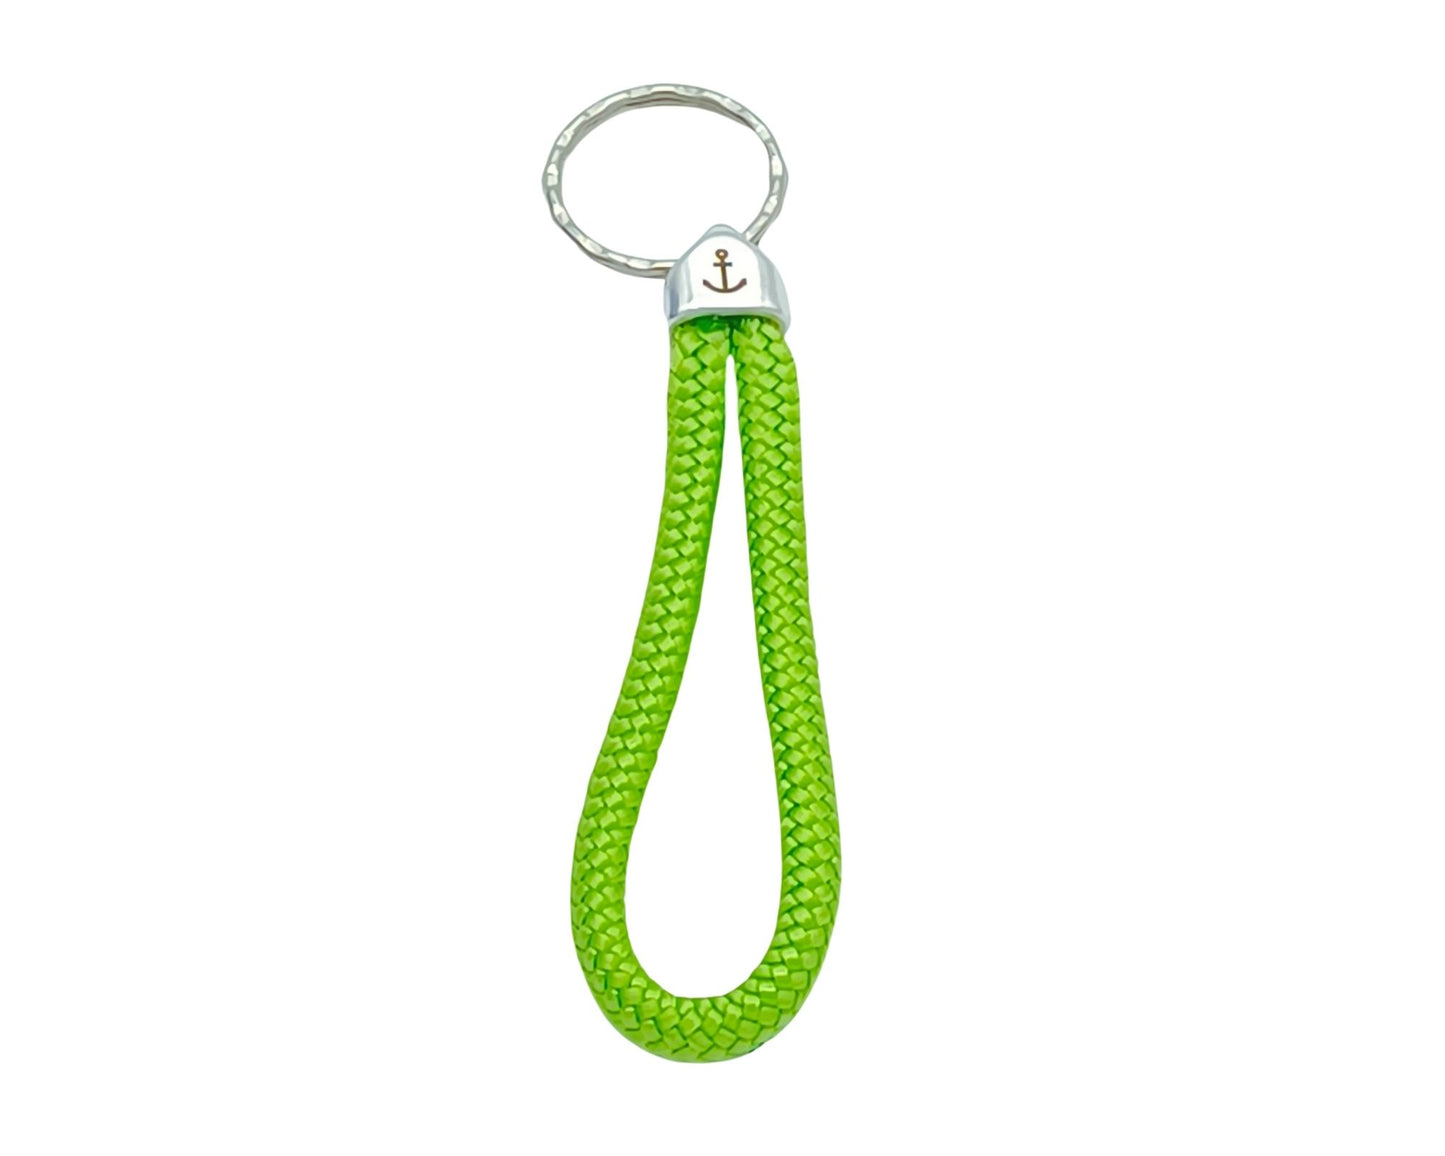 Segelseil Schlüsselanhänger 5mm Einfachschlaufe, grün, Anker